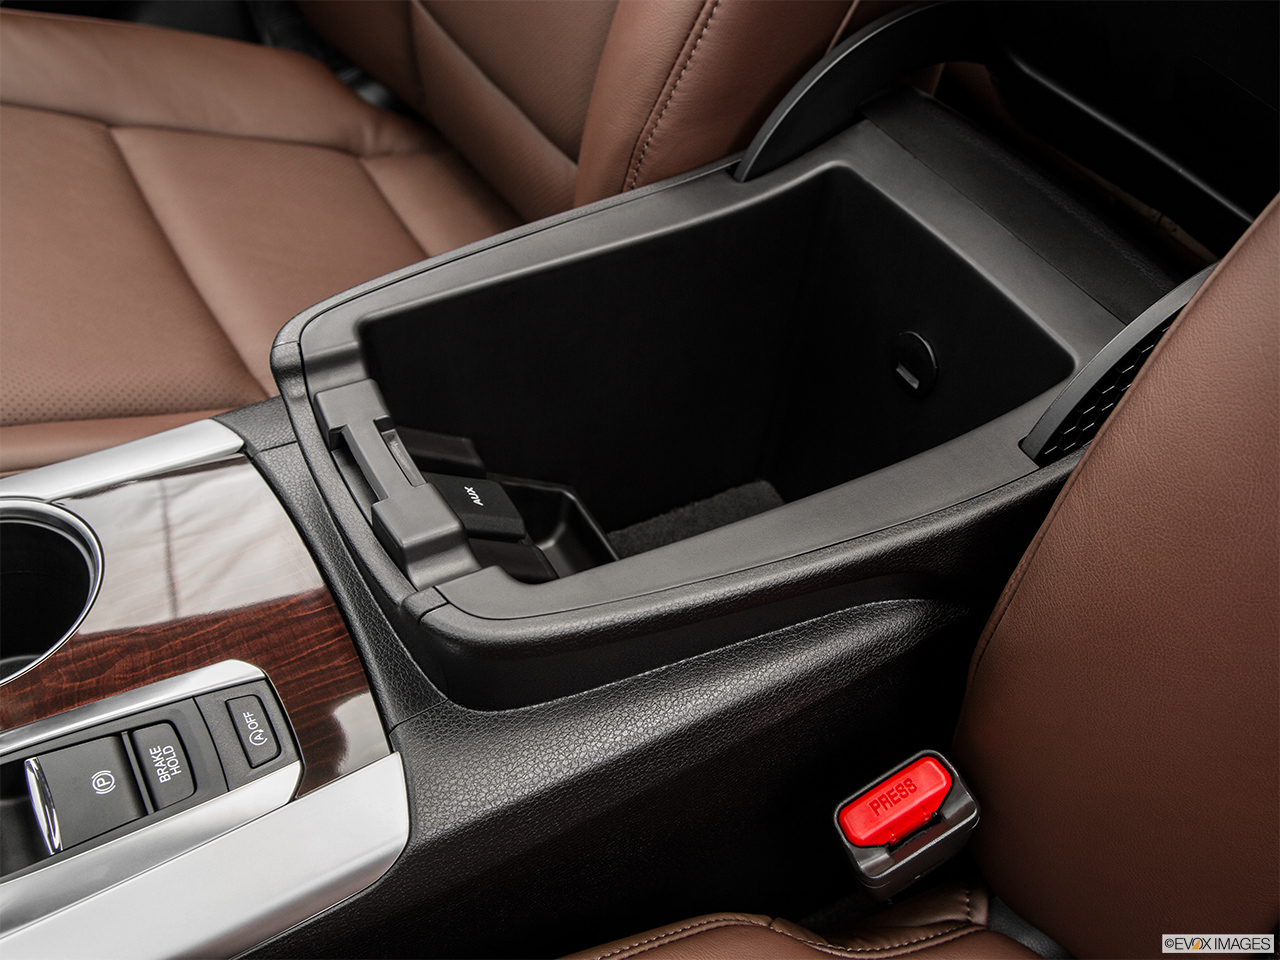 2015 Acura TLX 3.5 V-6 9-AT SH-AWD Front center divider. 